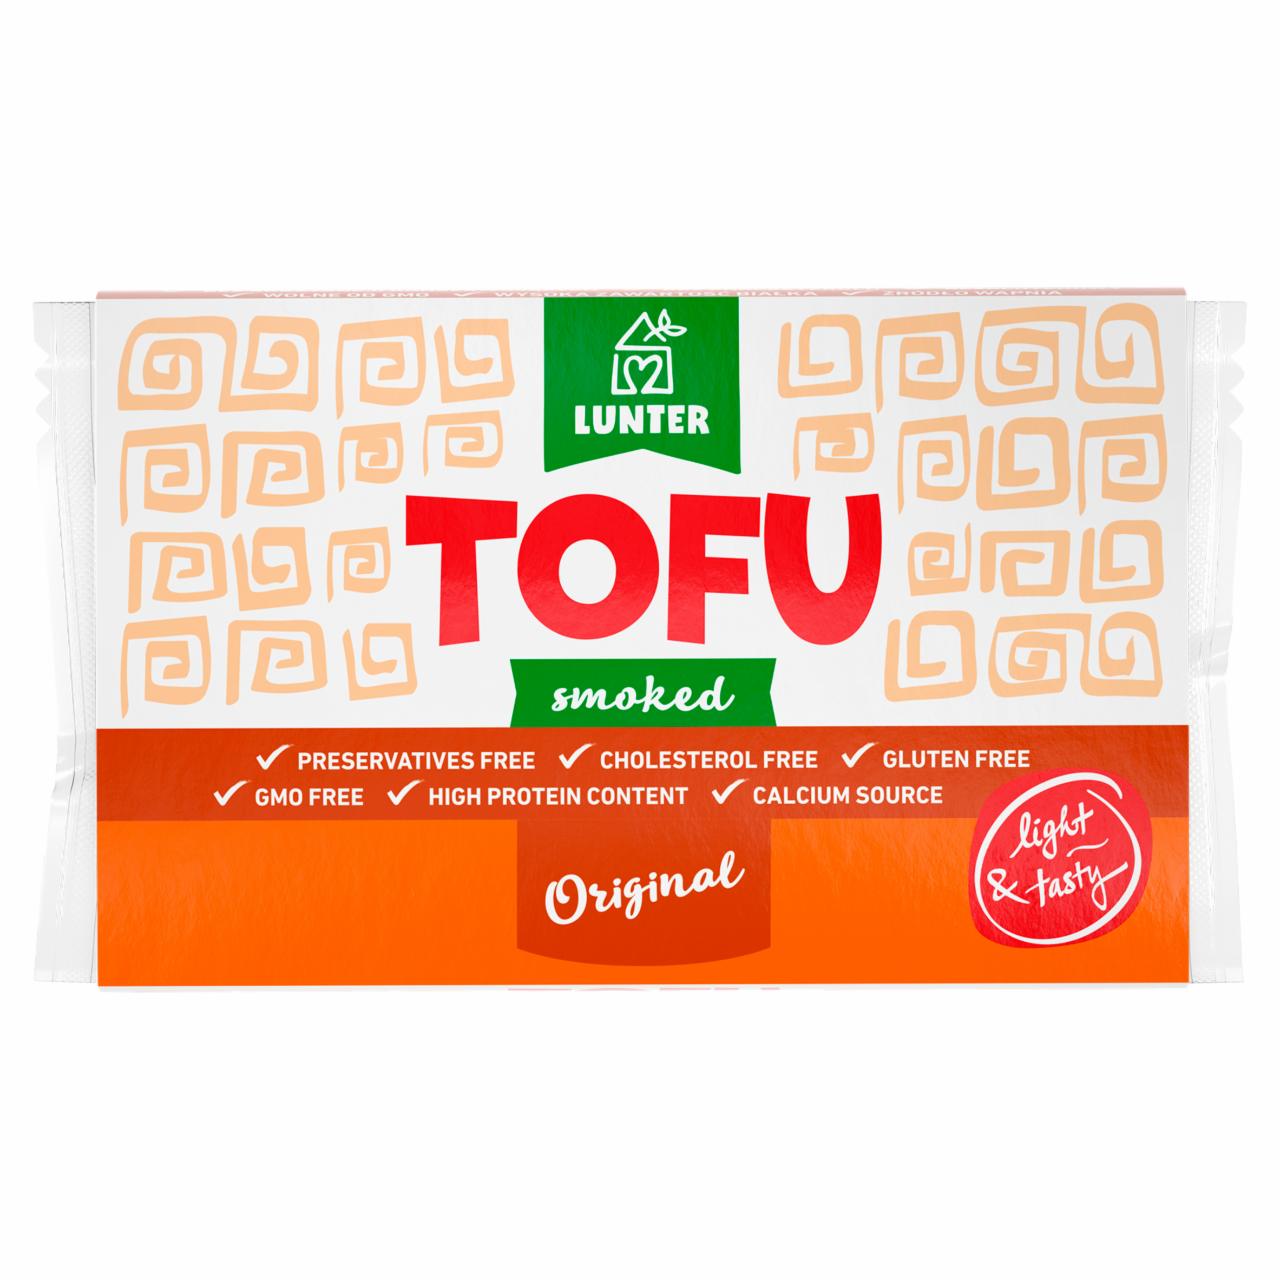 Képek - Lunter gluténmentes füstölt tofu 180 g